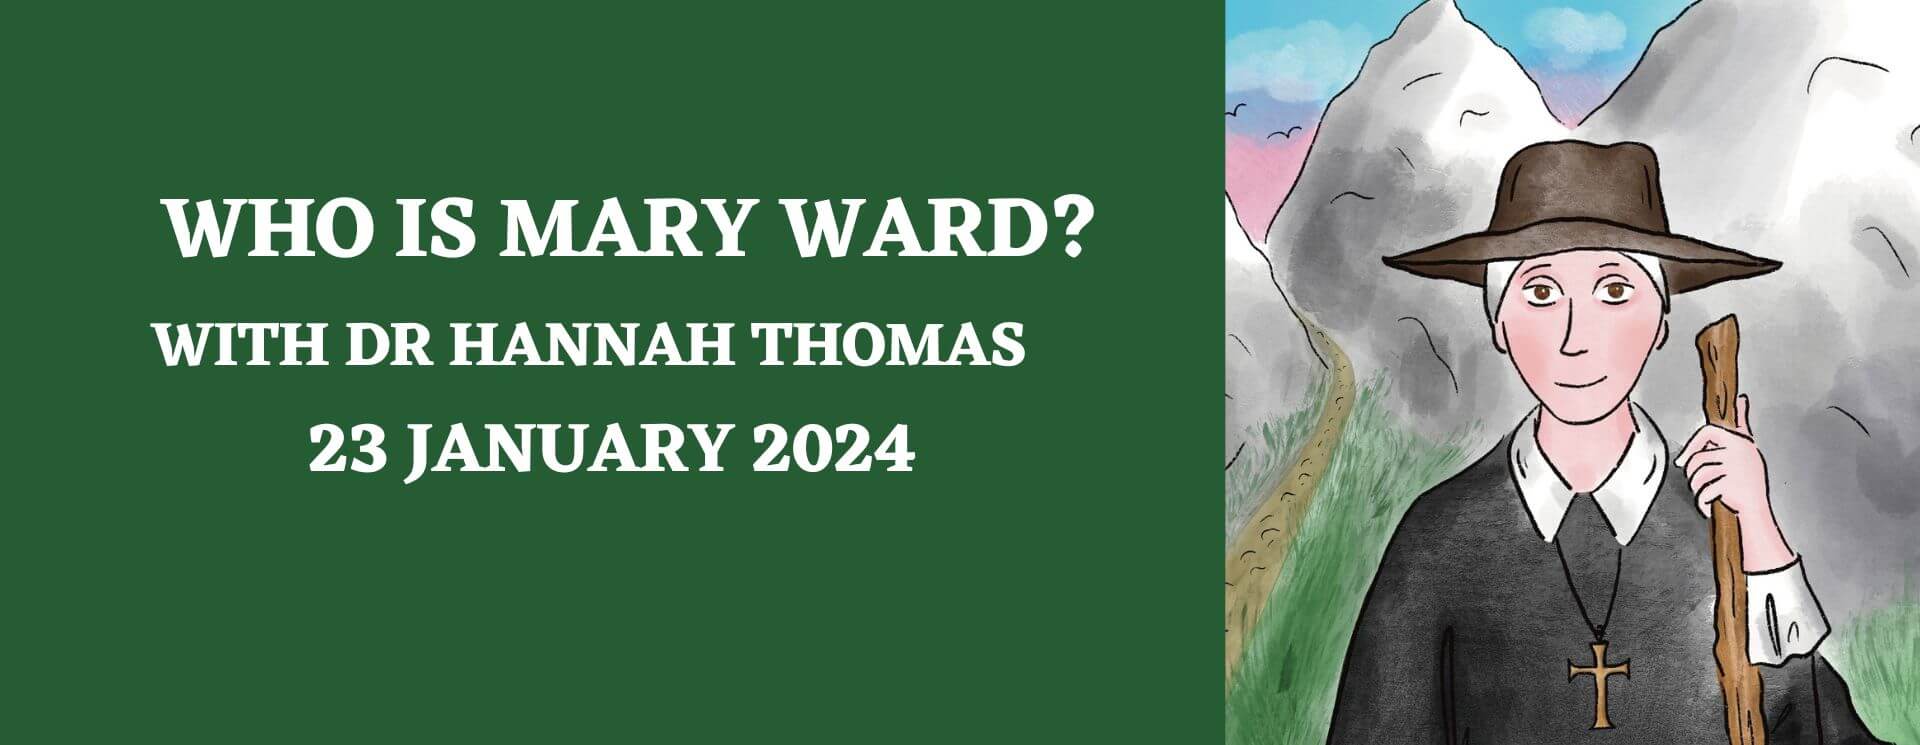 Who is Mary Ward?